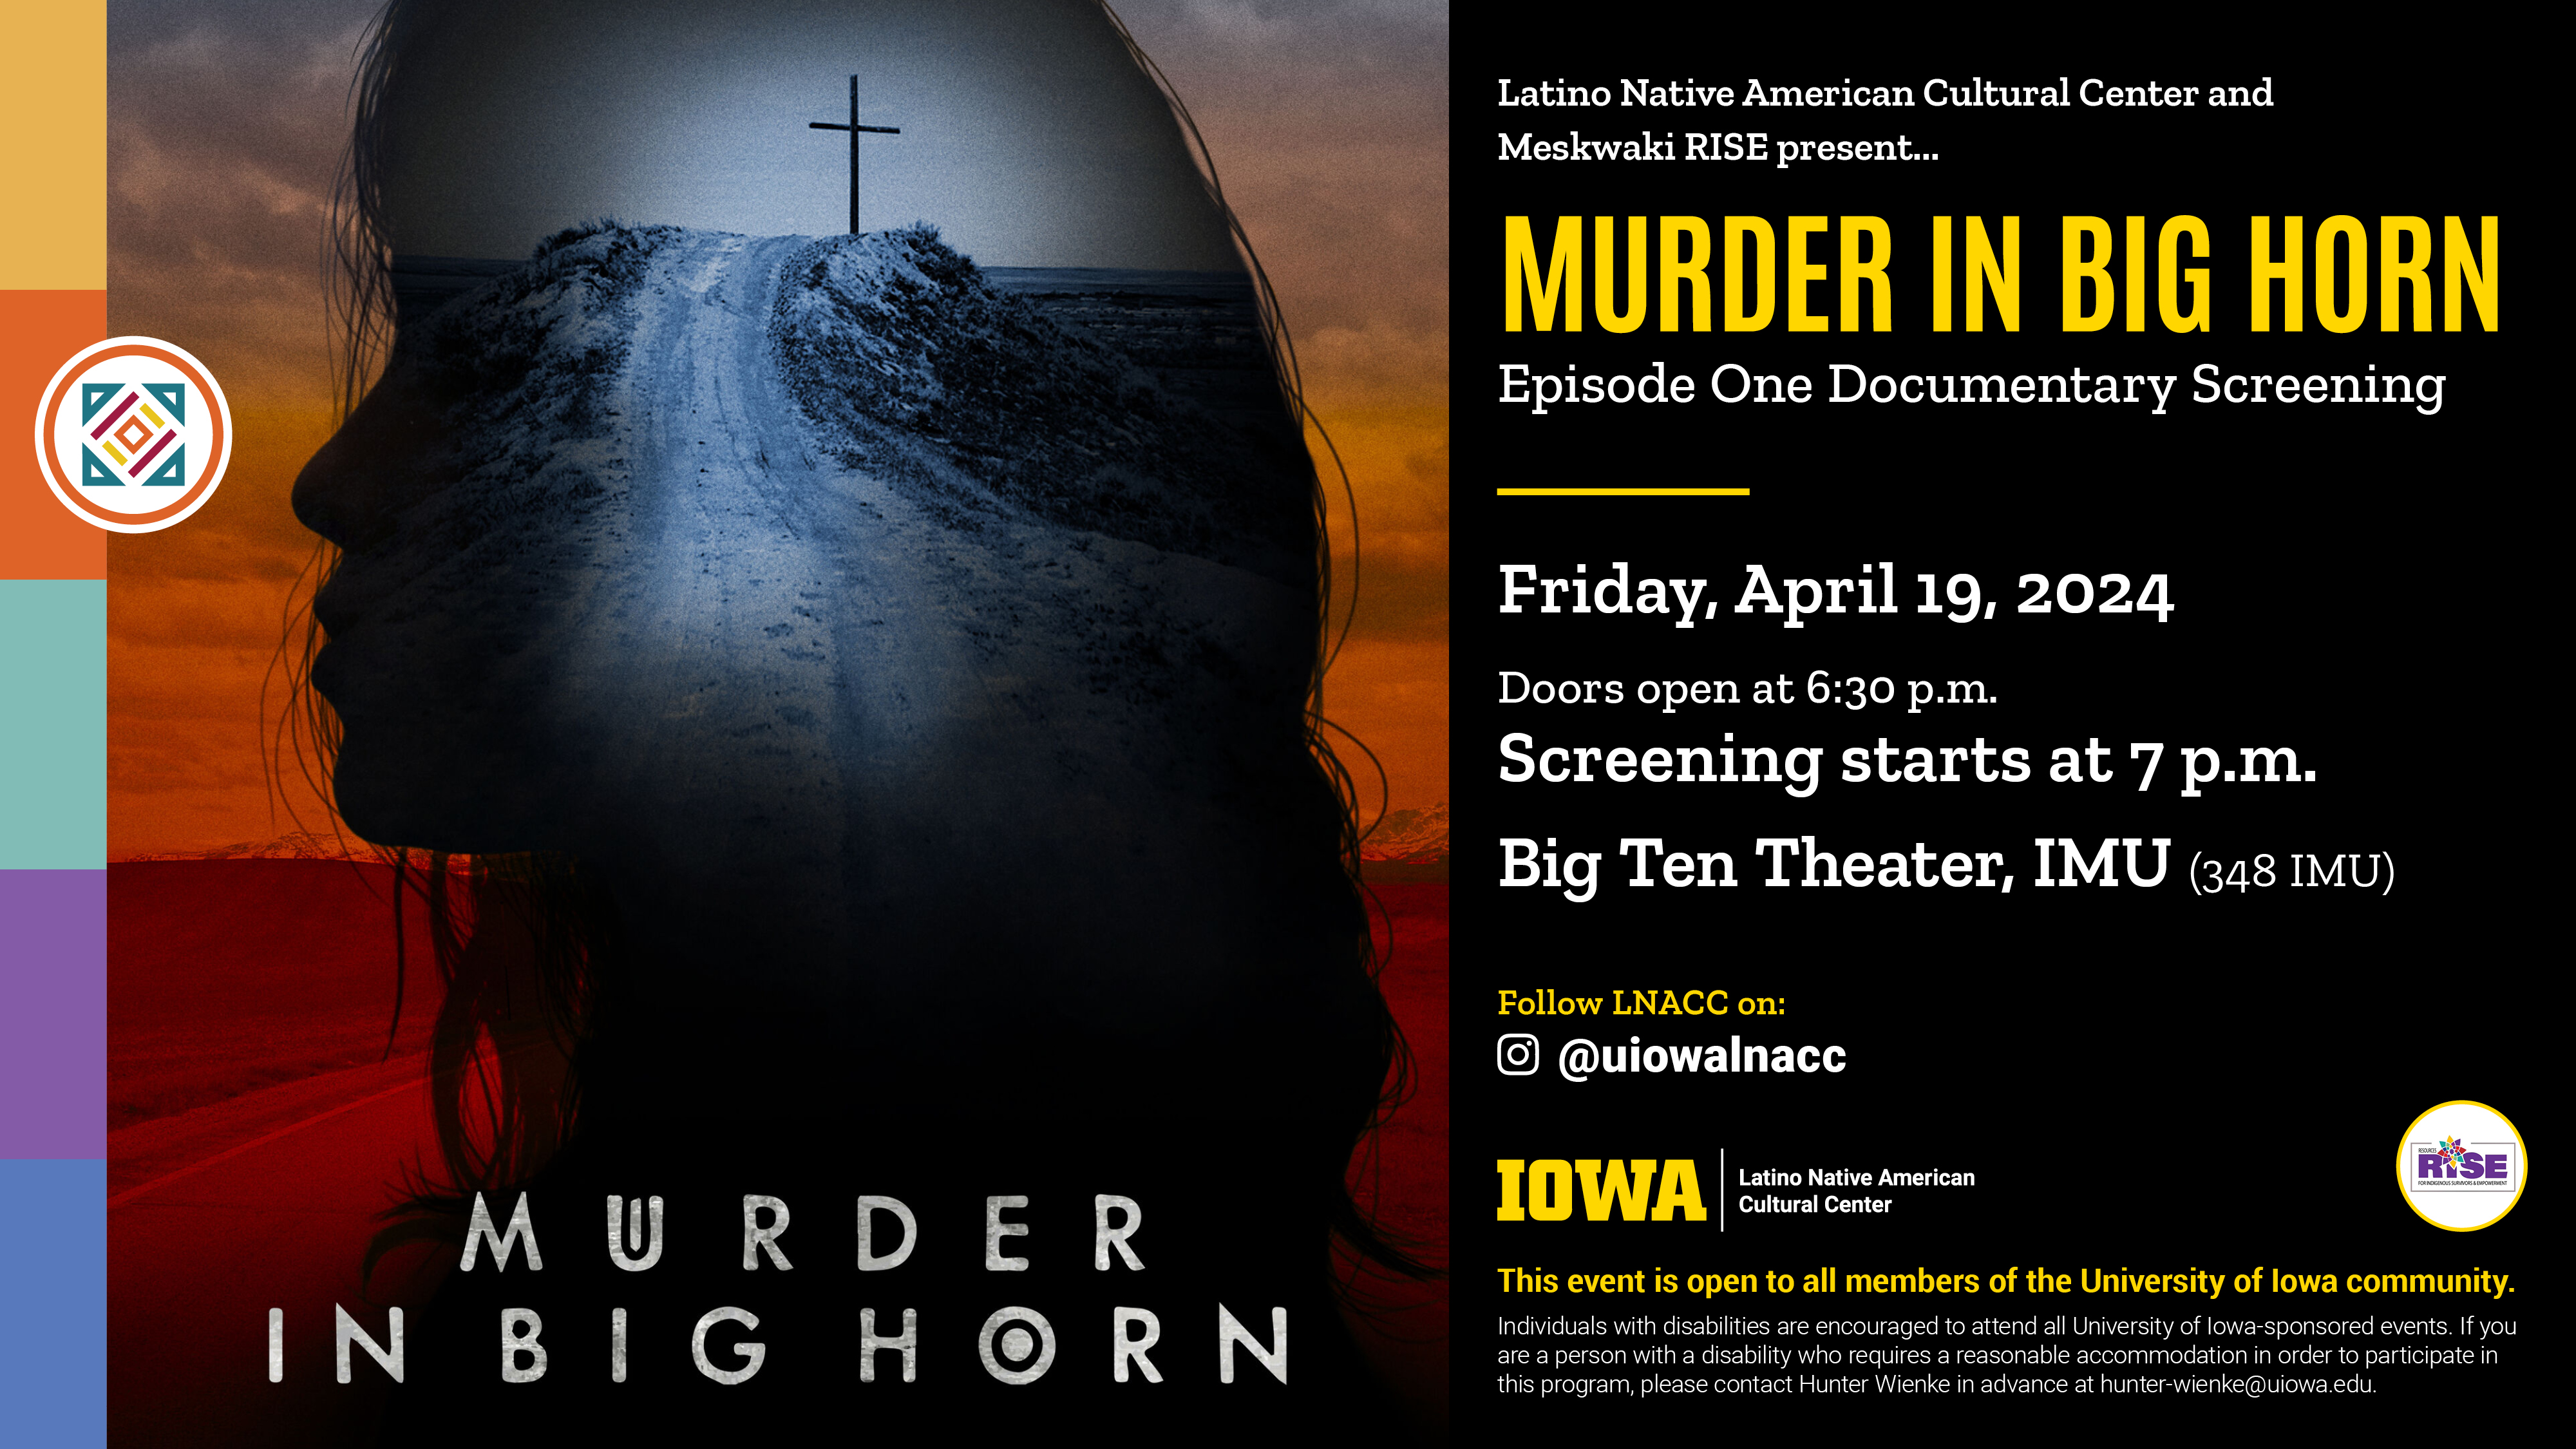 Murder in Big Horn: Episode One Documentary Screening. Please contact Hunter Wienke at hunter-wienke@uiowa.edu for more information.